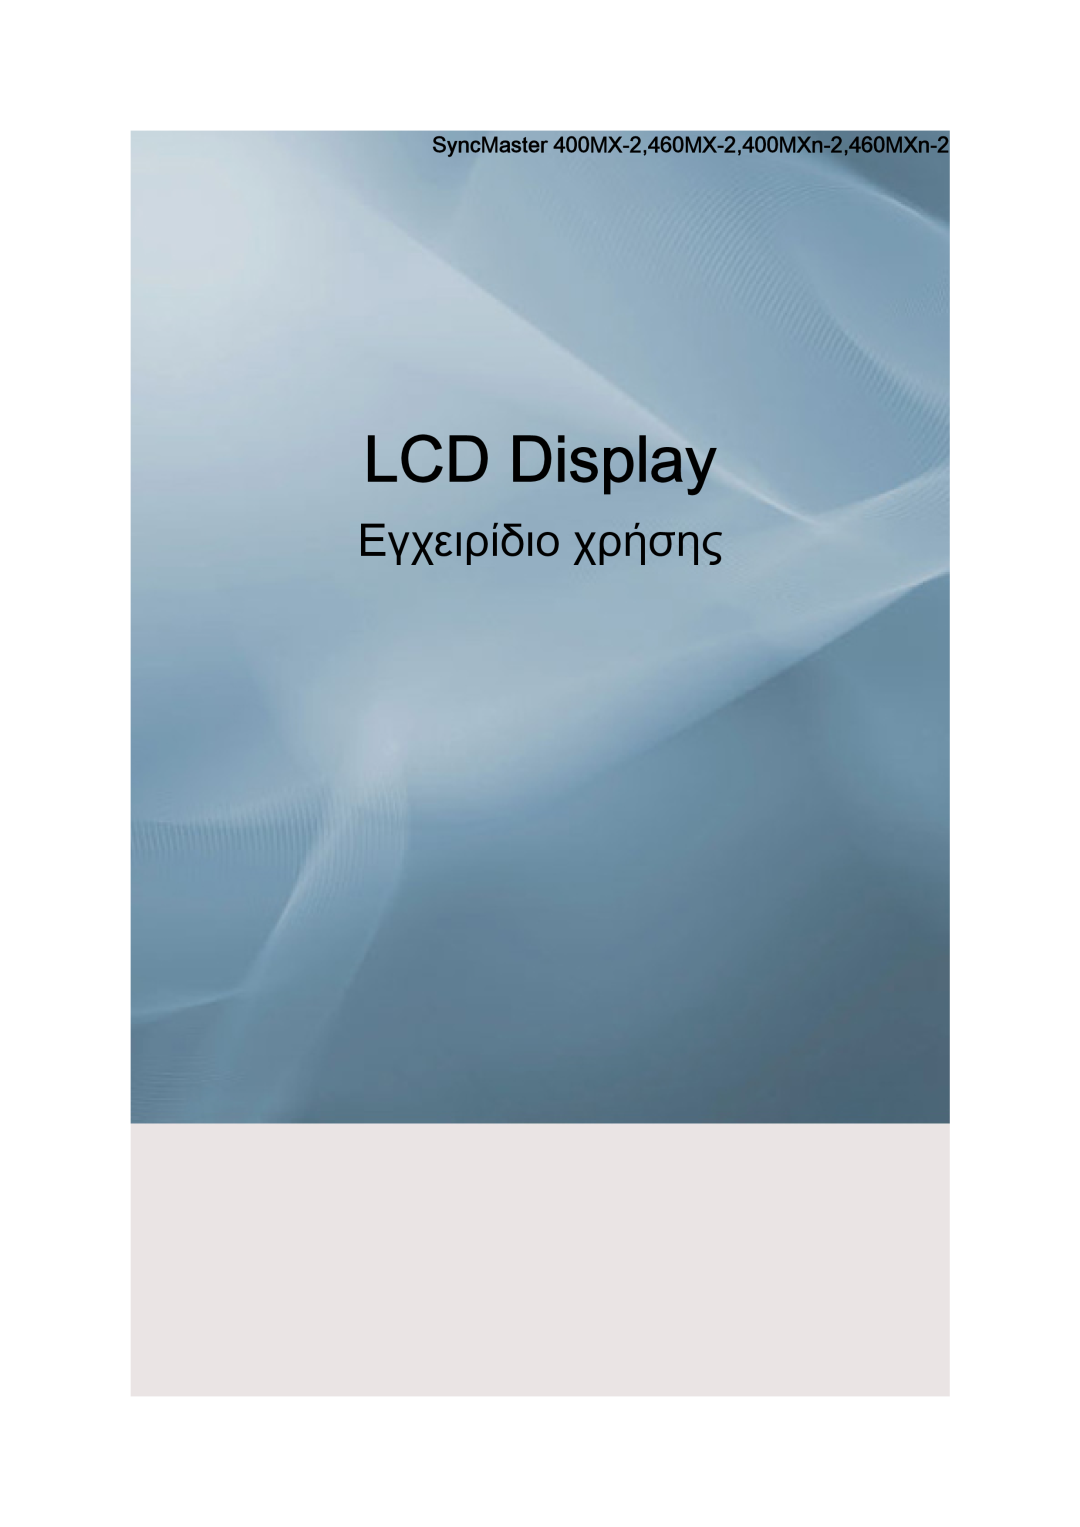 Samsung LH40MGQLBC/EN, LH40MGULBC/EN manual SyncMaster 400MX-2,460MX-2,400MXn-2,460MXn-2, LCD Display, Εγχειρίδιο χρήσης 